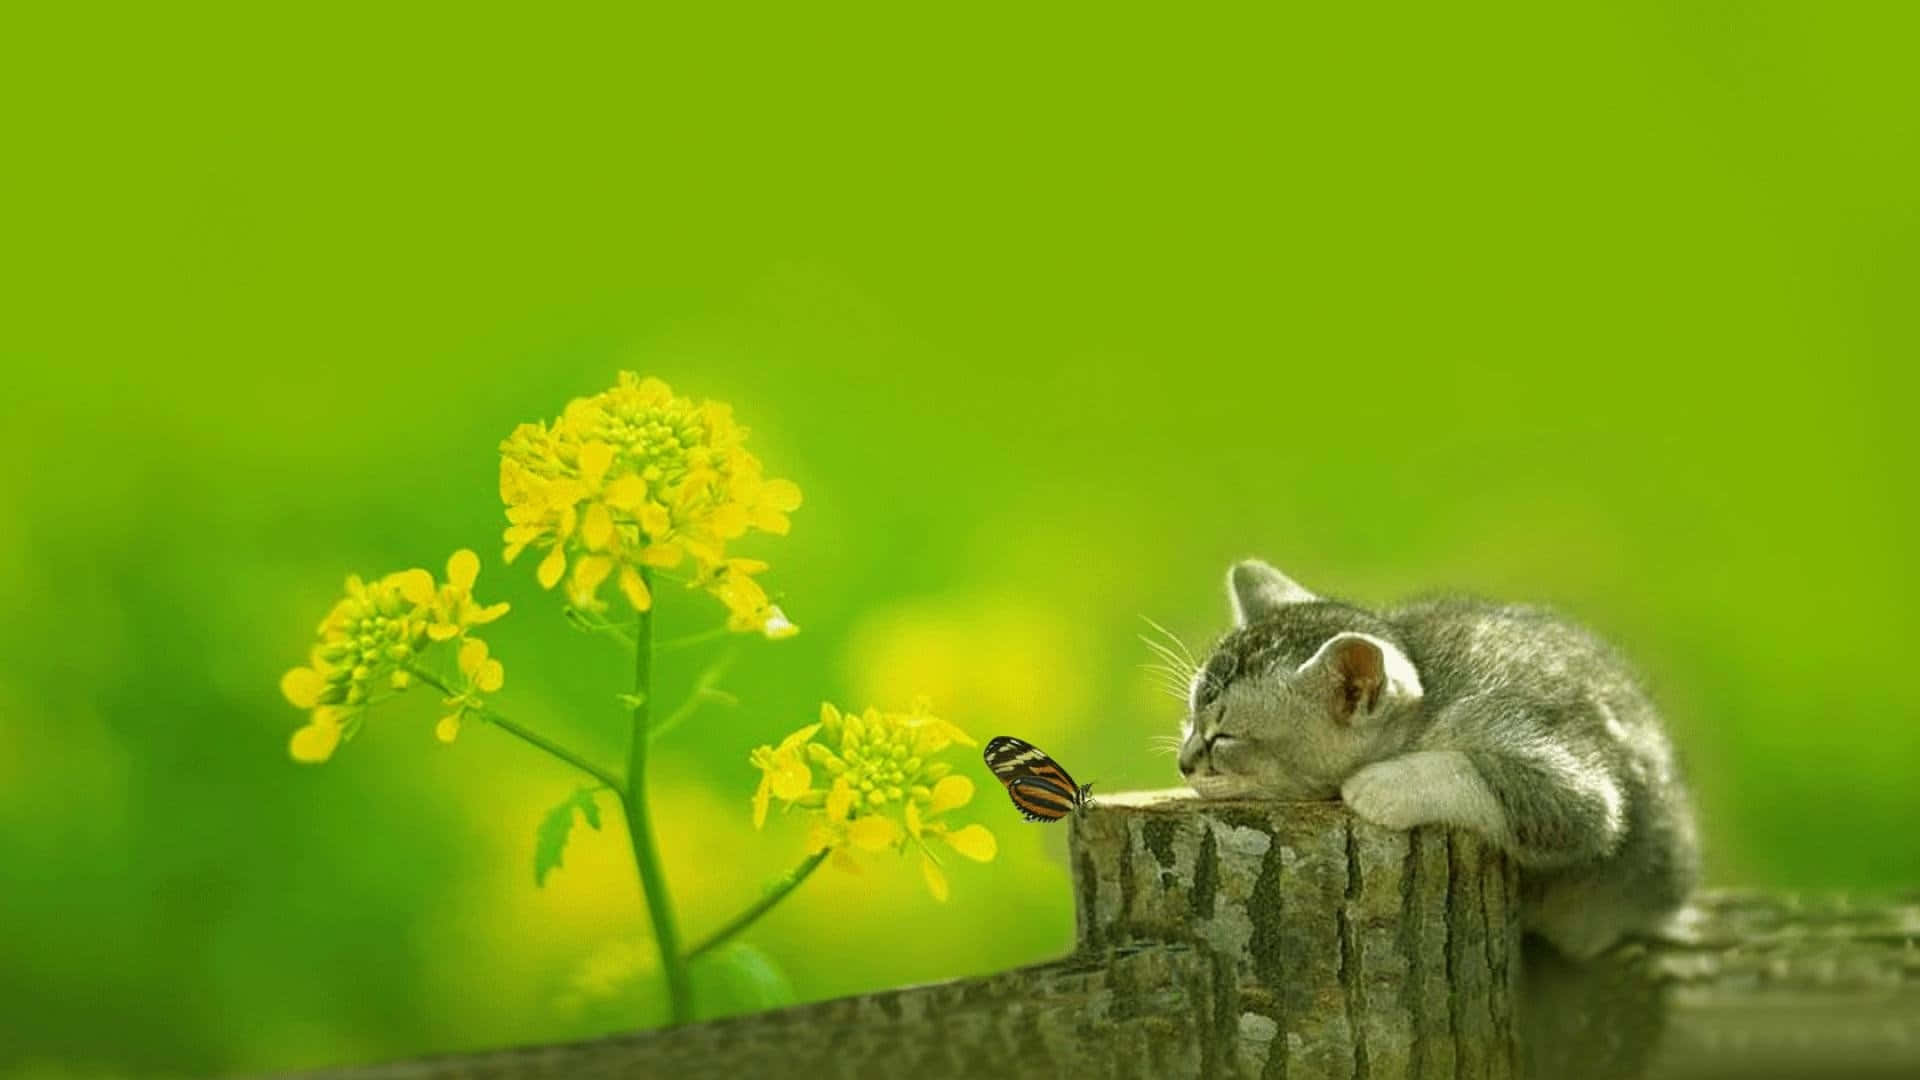 Imagende Un Lindo Gato Verde Con Animales